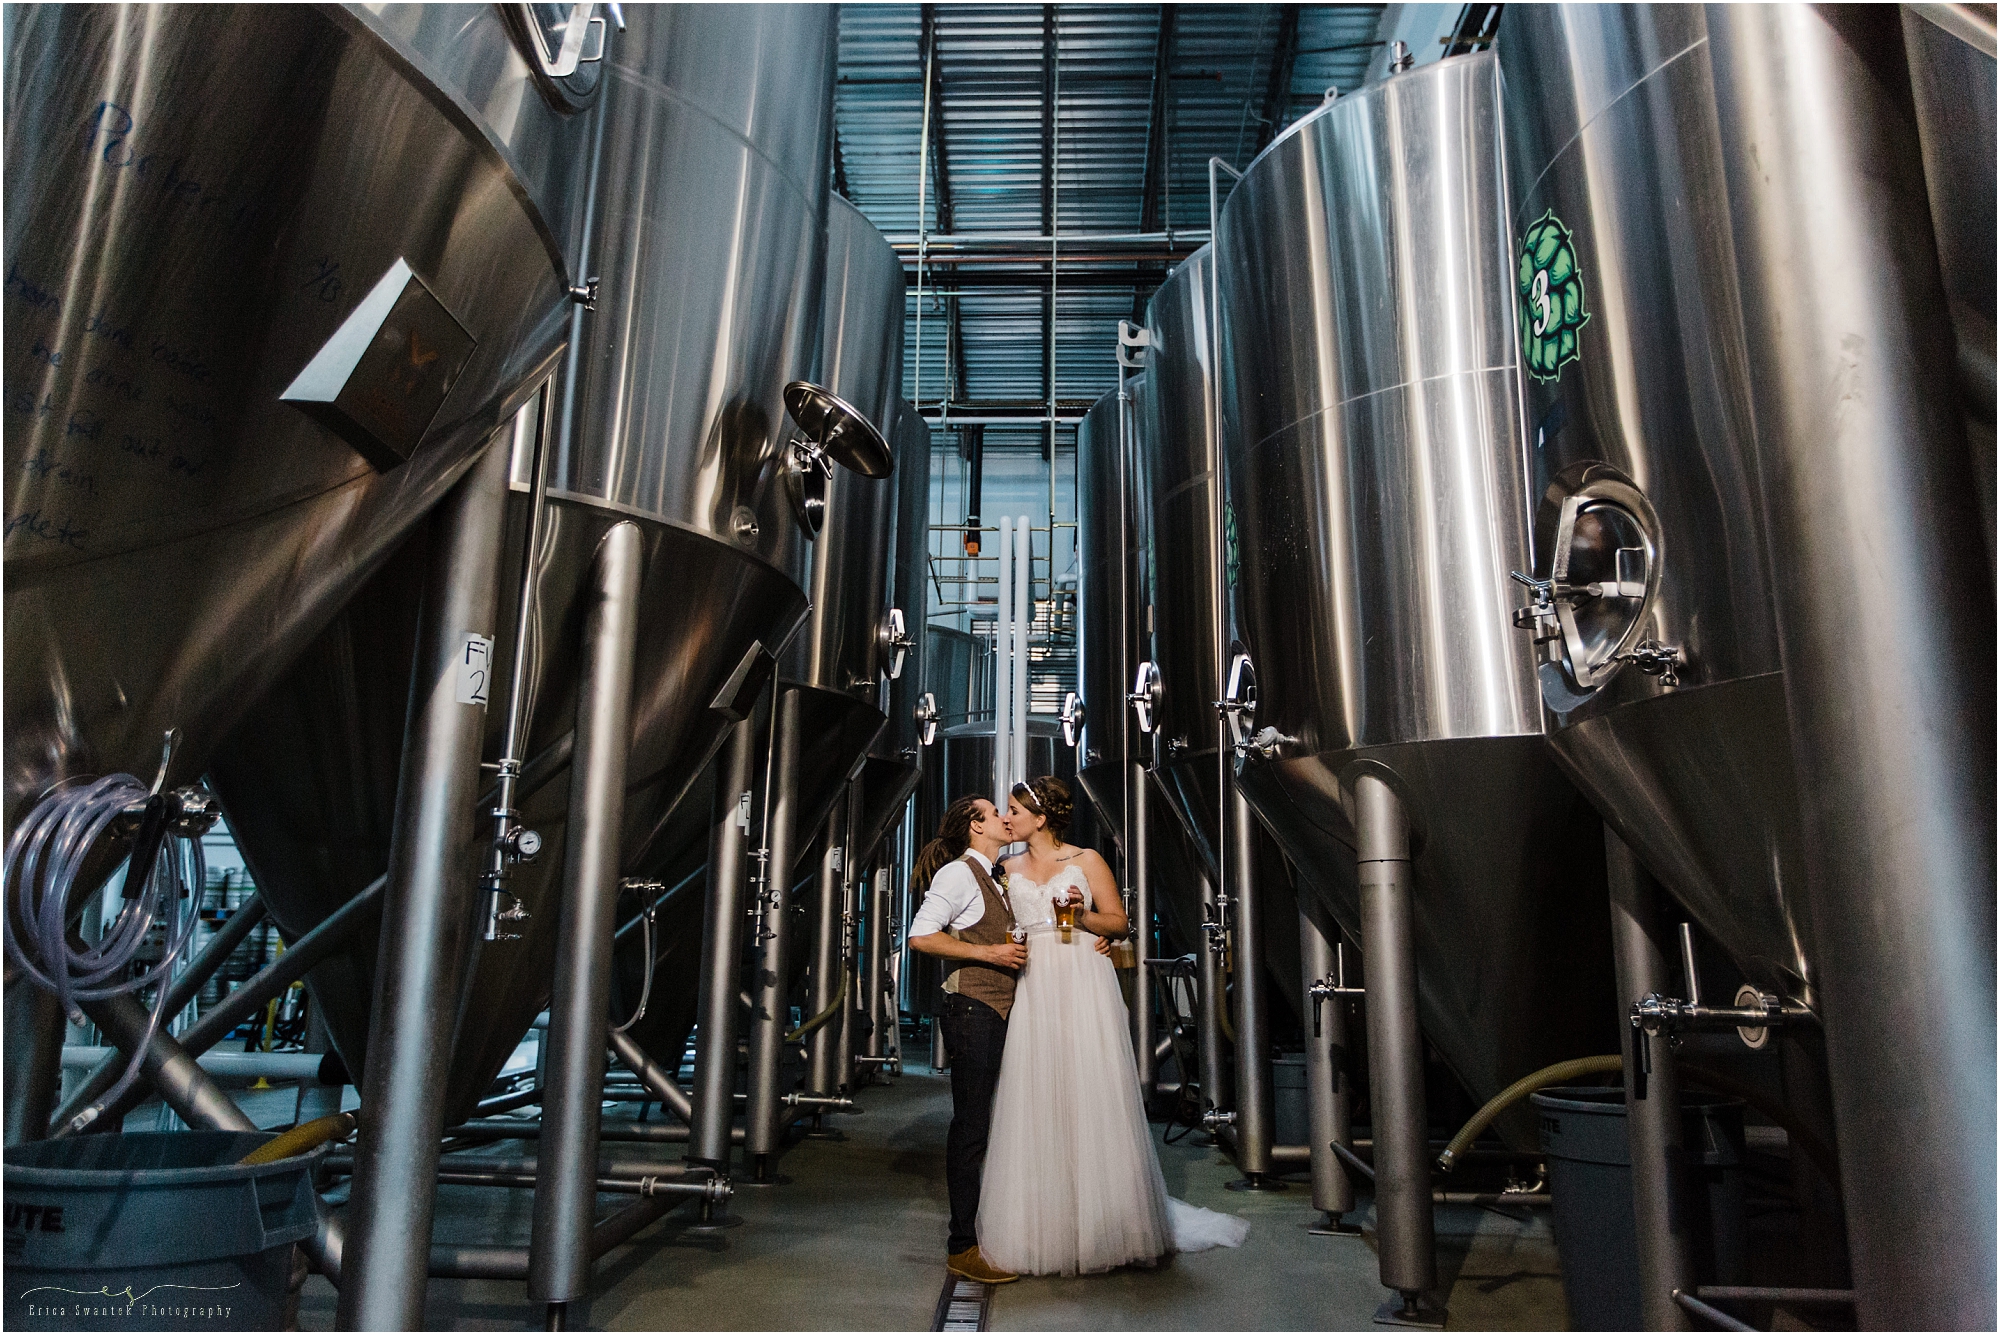 Worthy Brewing Wedding in Bend, Oregon. | Erica Swantek Photography